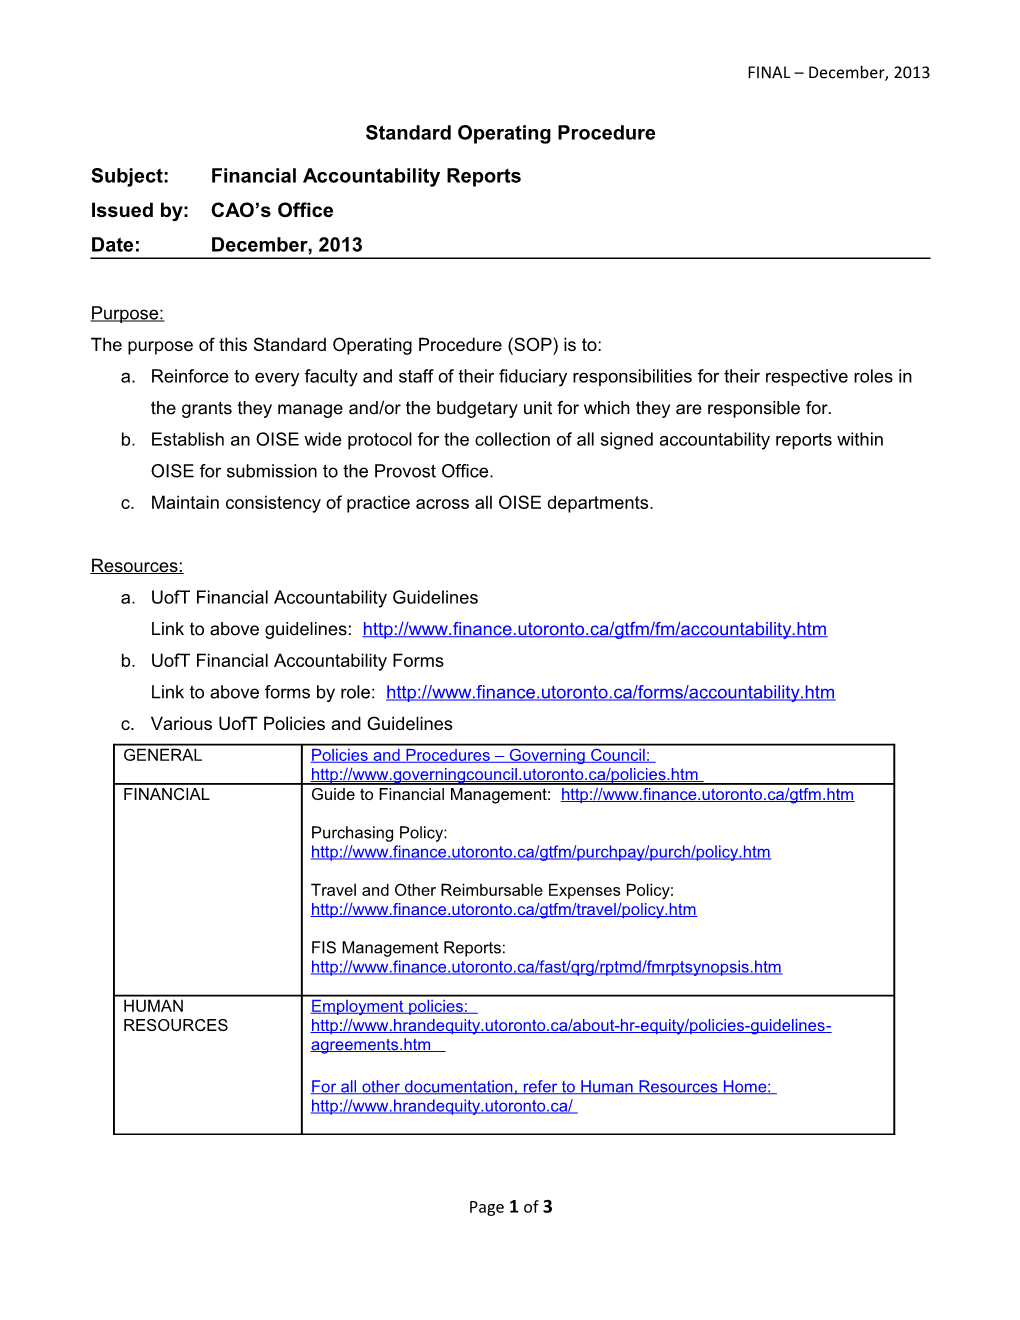 Subject:Financial Accountability Reports